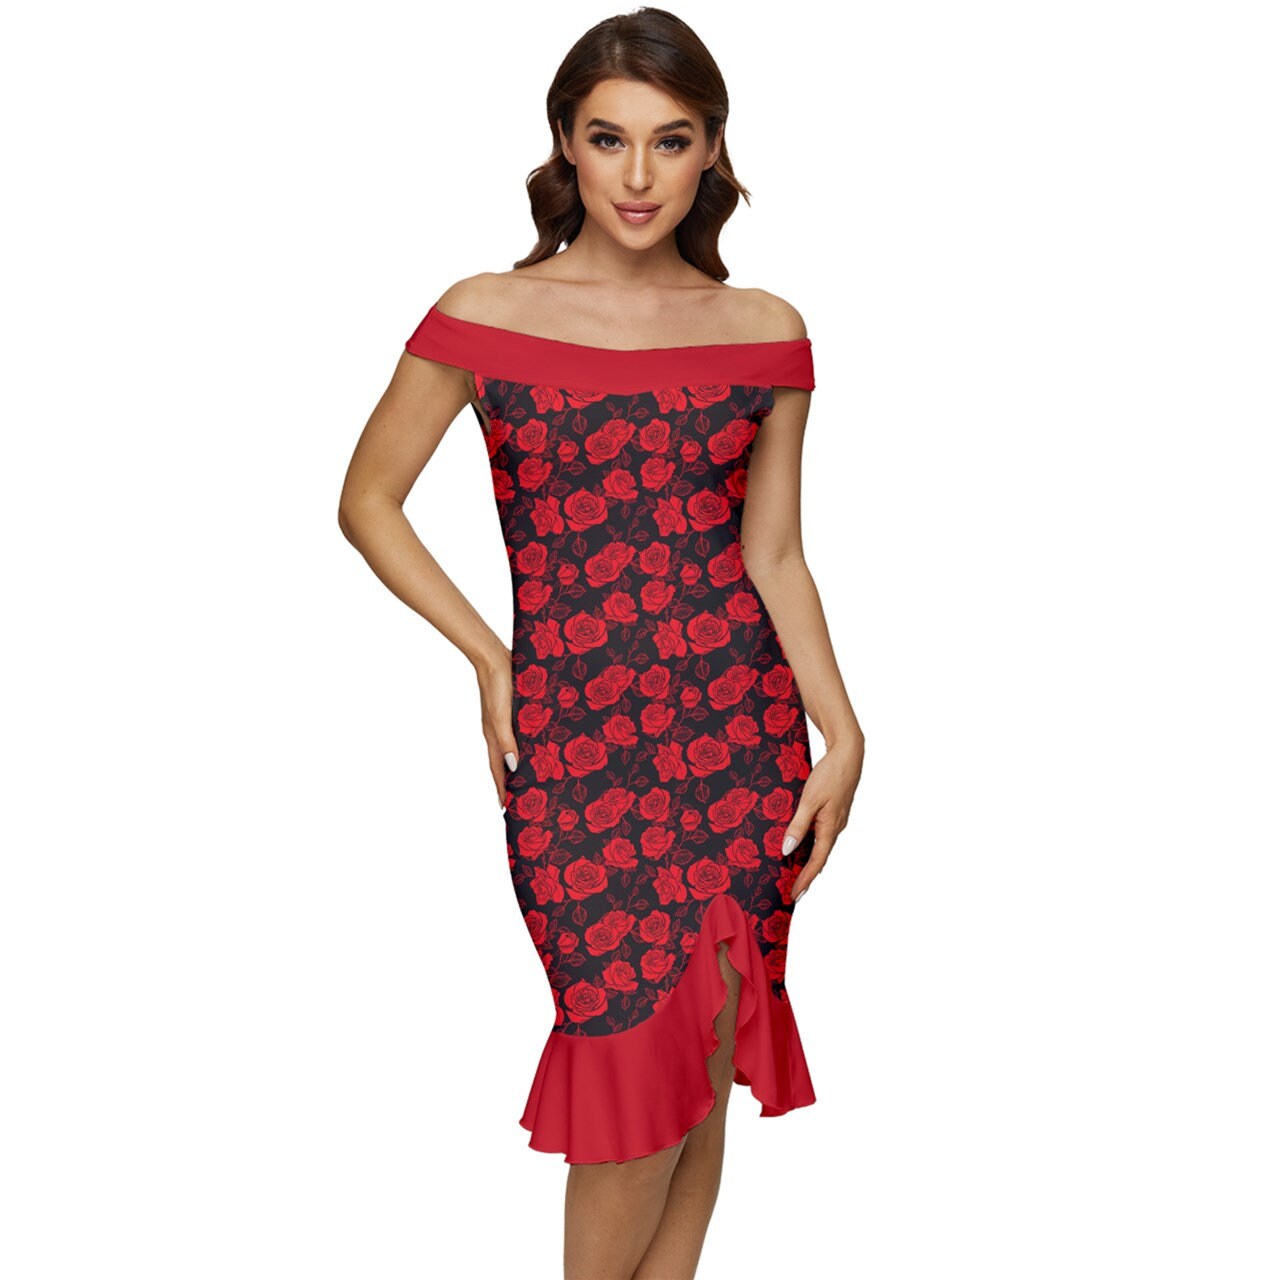 Pin up Dress, Red Sheath Dress, Retro 40s Dress Style, Women's sheath dress, Floral Dress, Sexy Dress, Off shoulder dress, Red Rose Dress